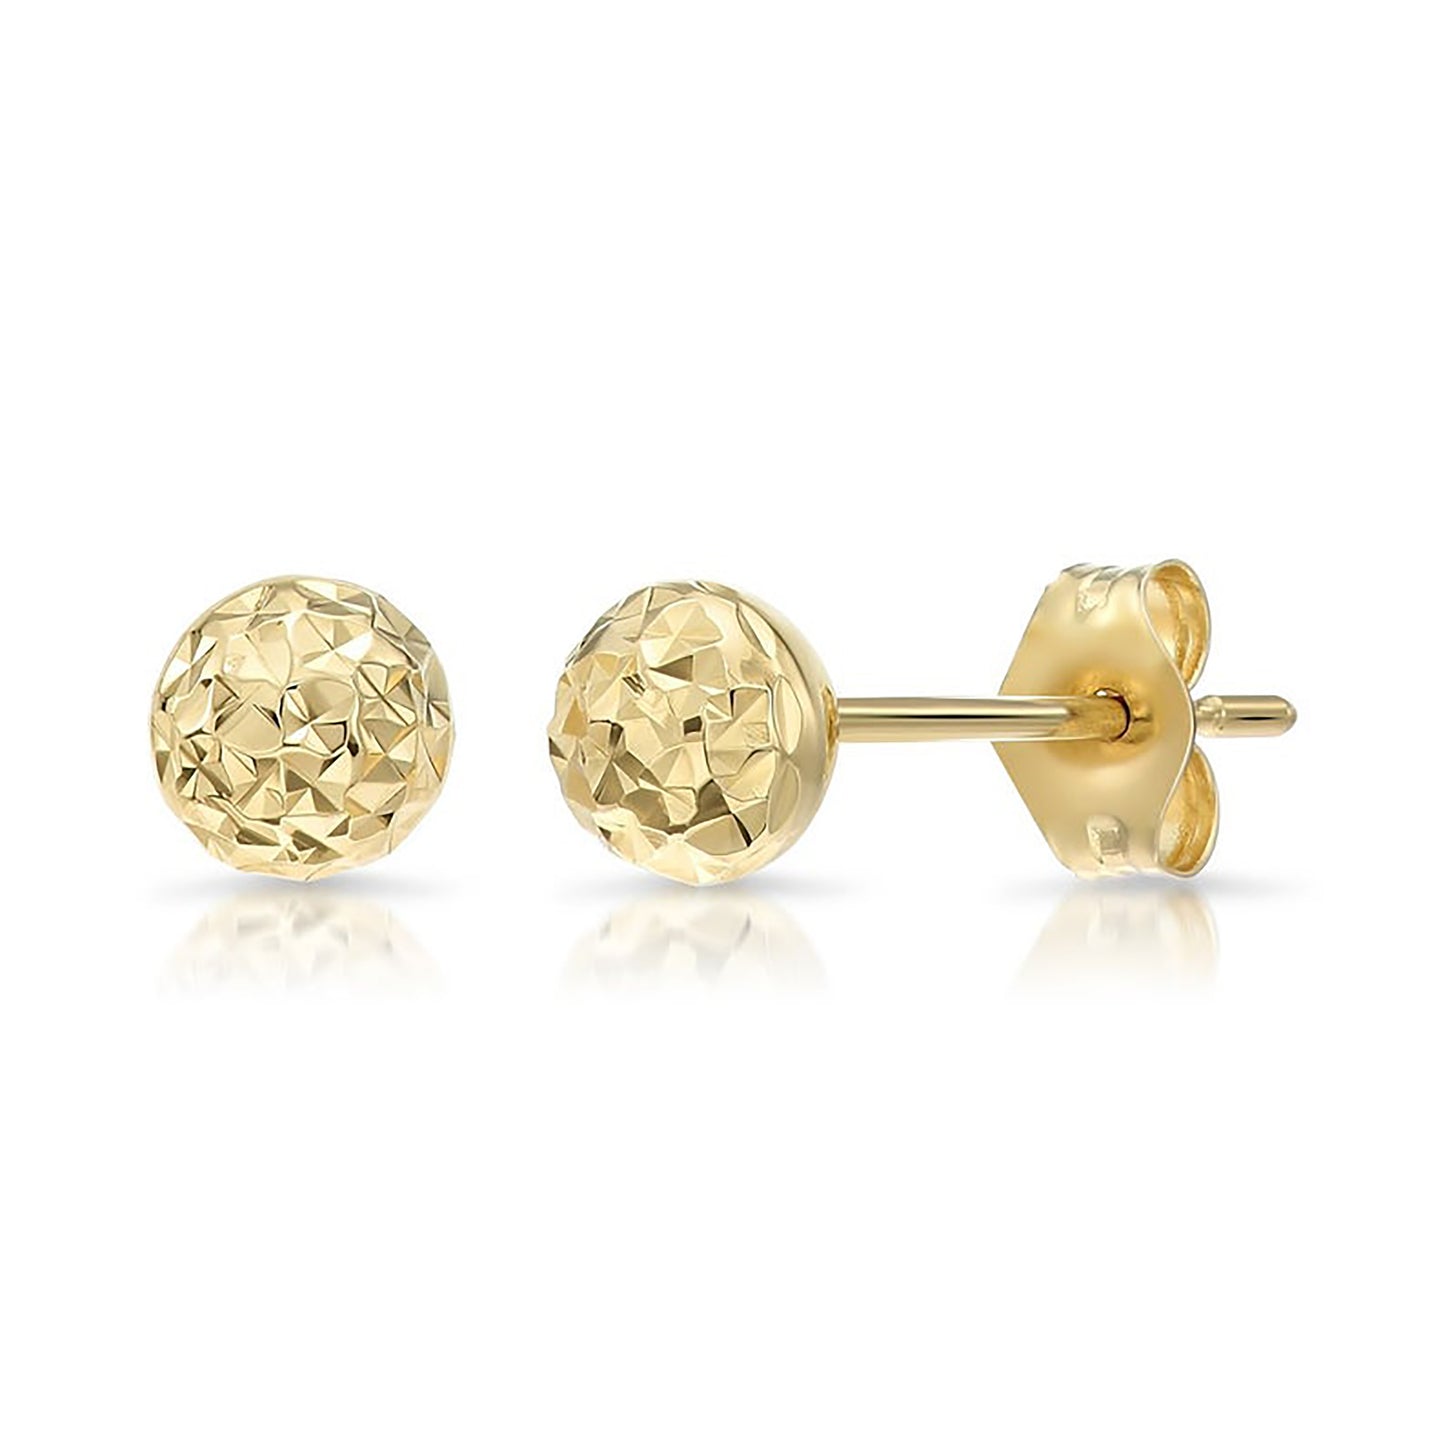 8mm White Gold Diamond-Cut Stud Earrings